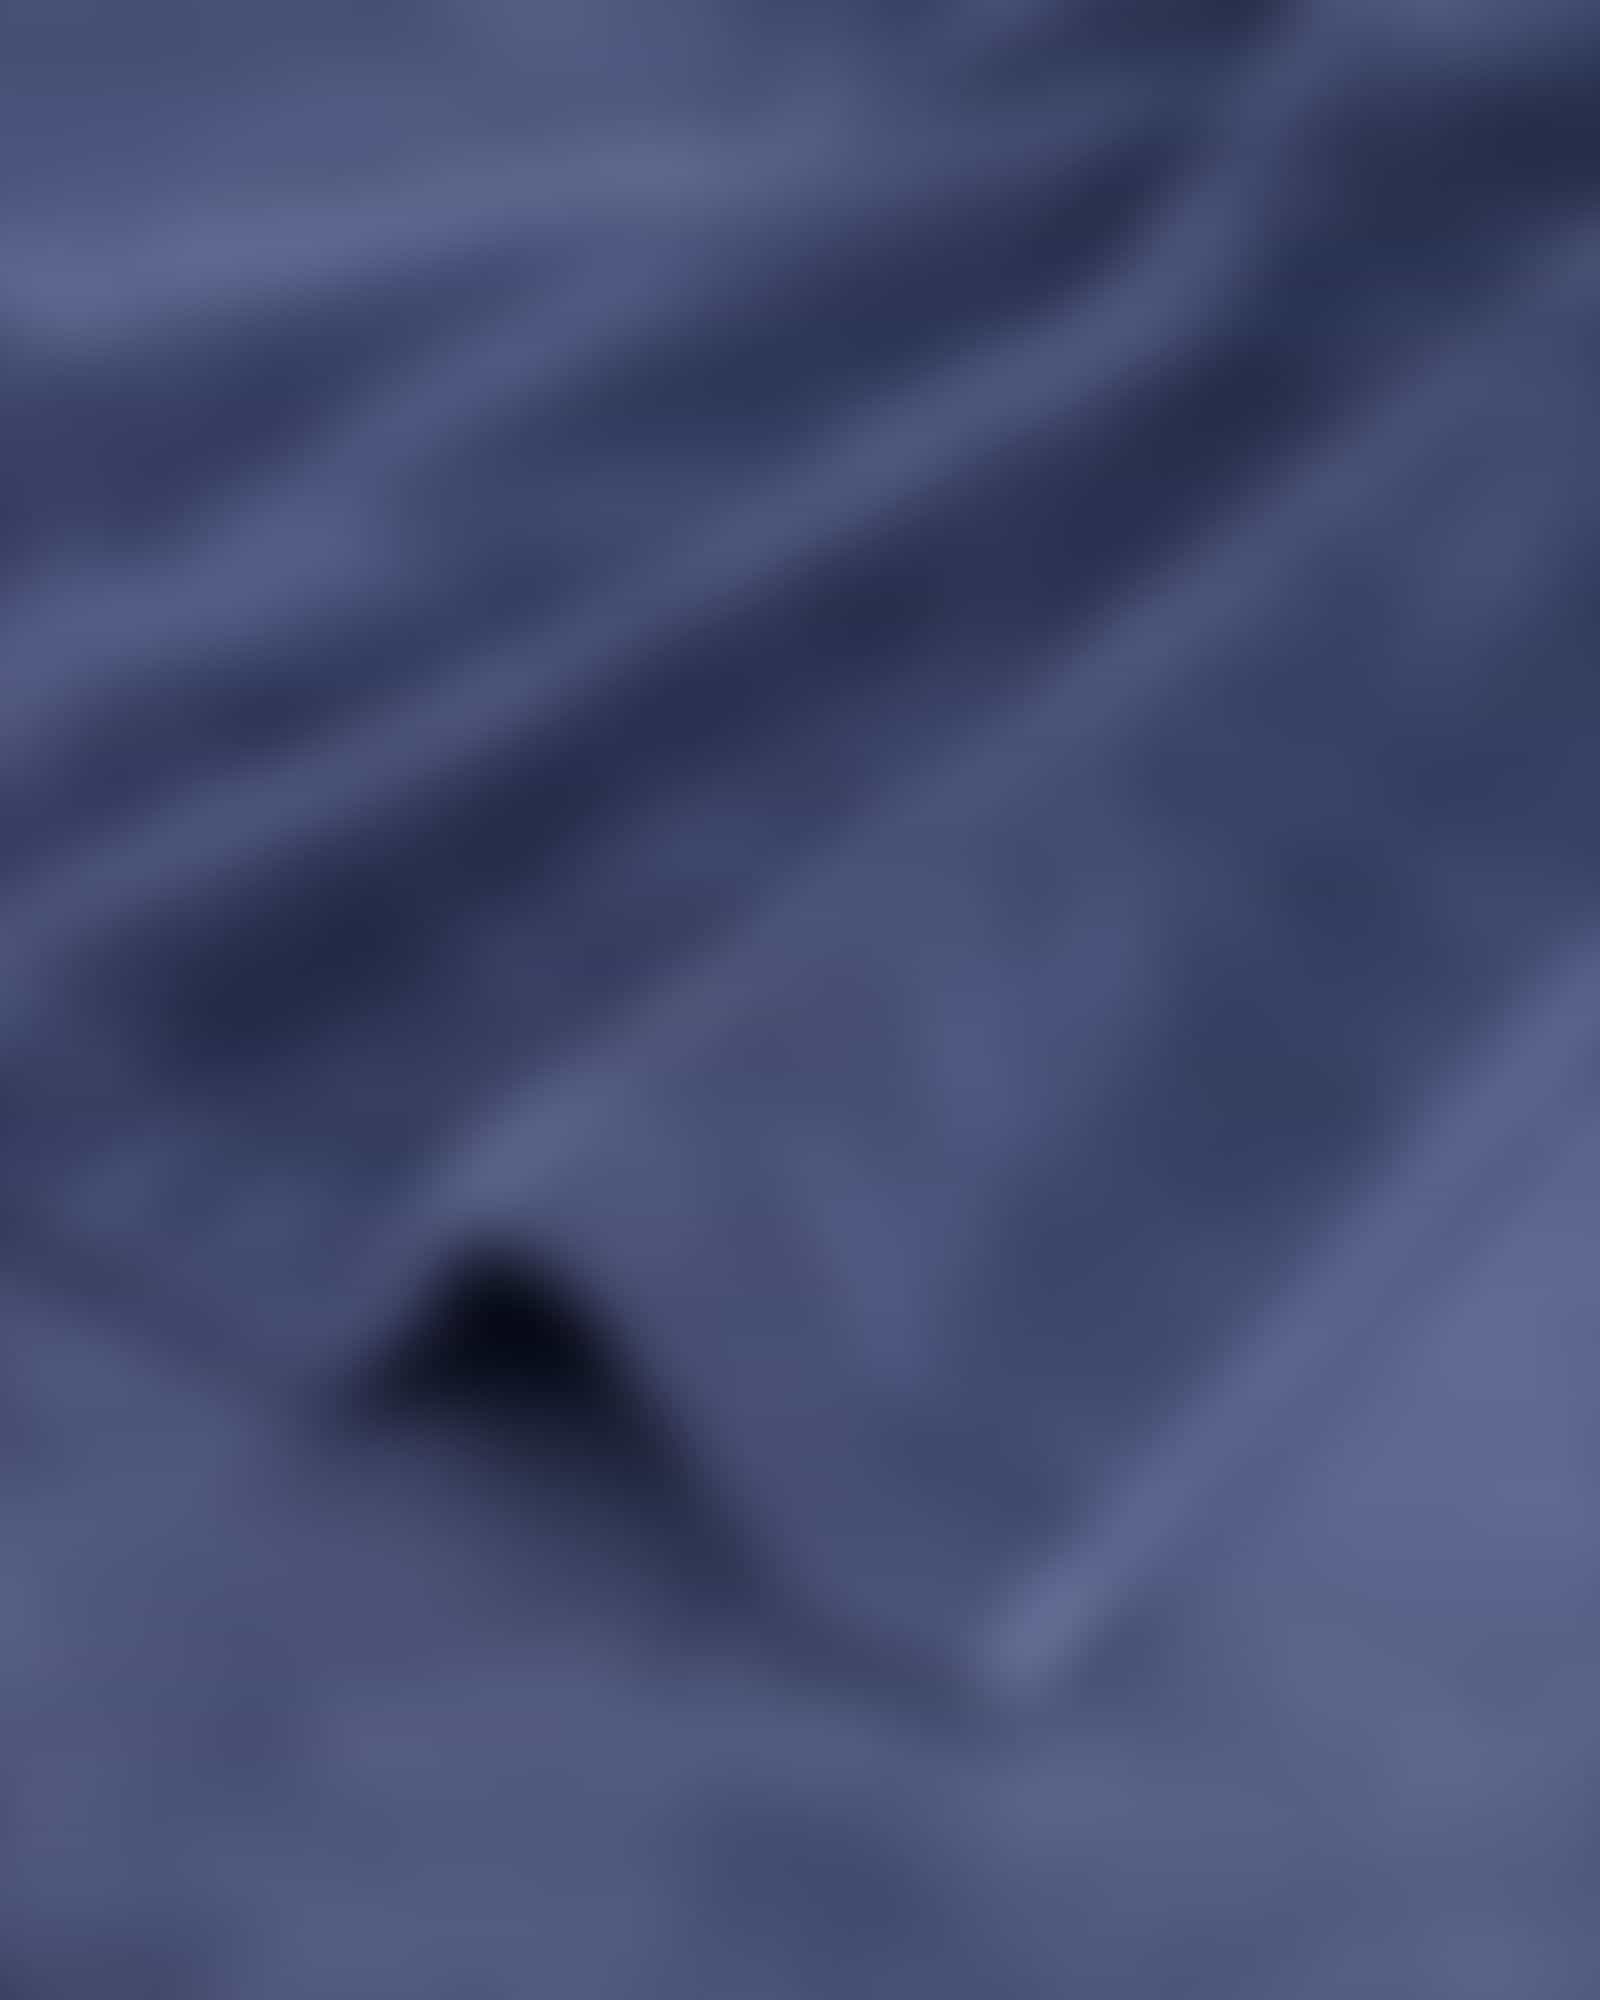 Cawö - Life Style Uni 7007 - Farbe: nachtblau - 111 Gästetuch 30x50 cm